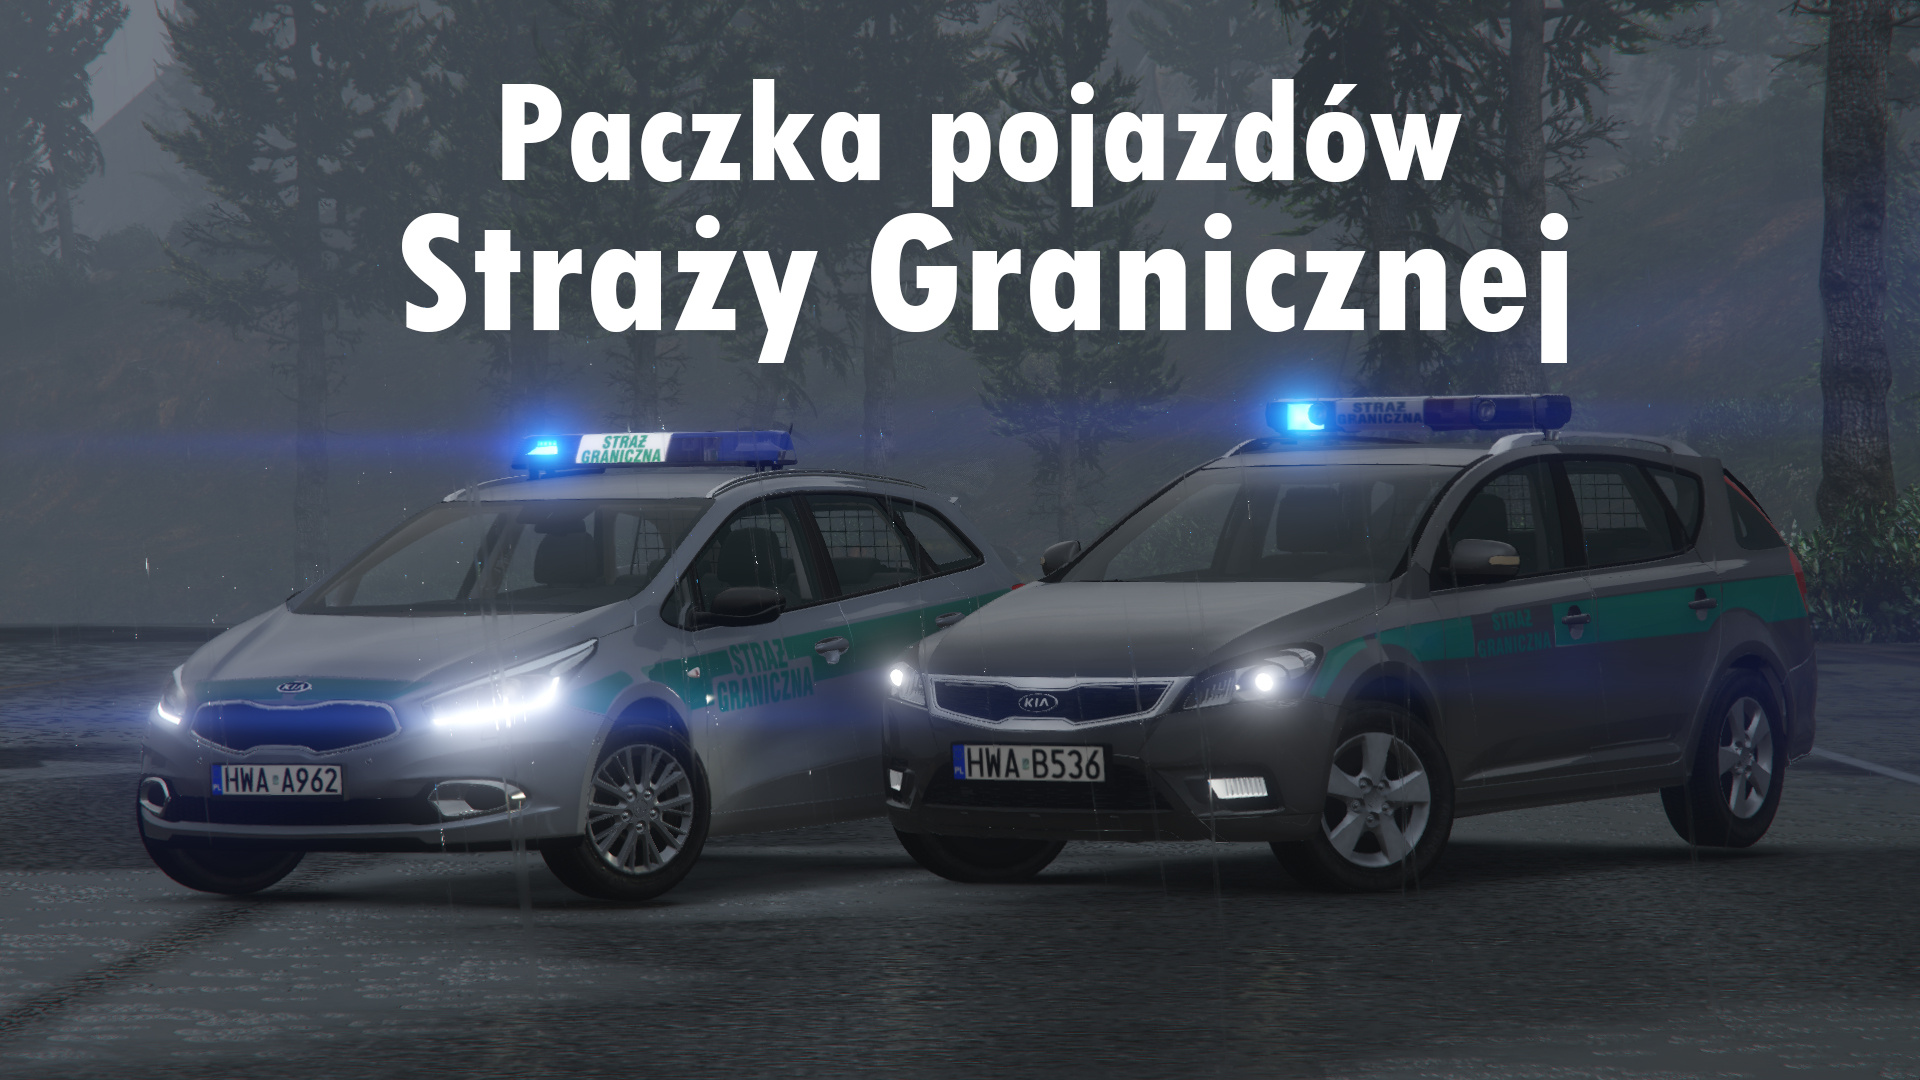 Polish Border Guard Vehicles Pack